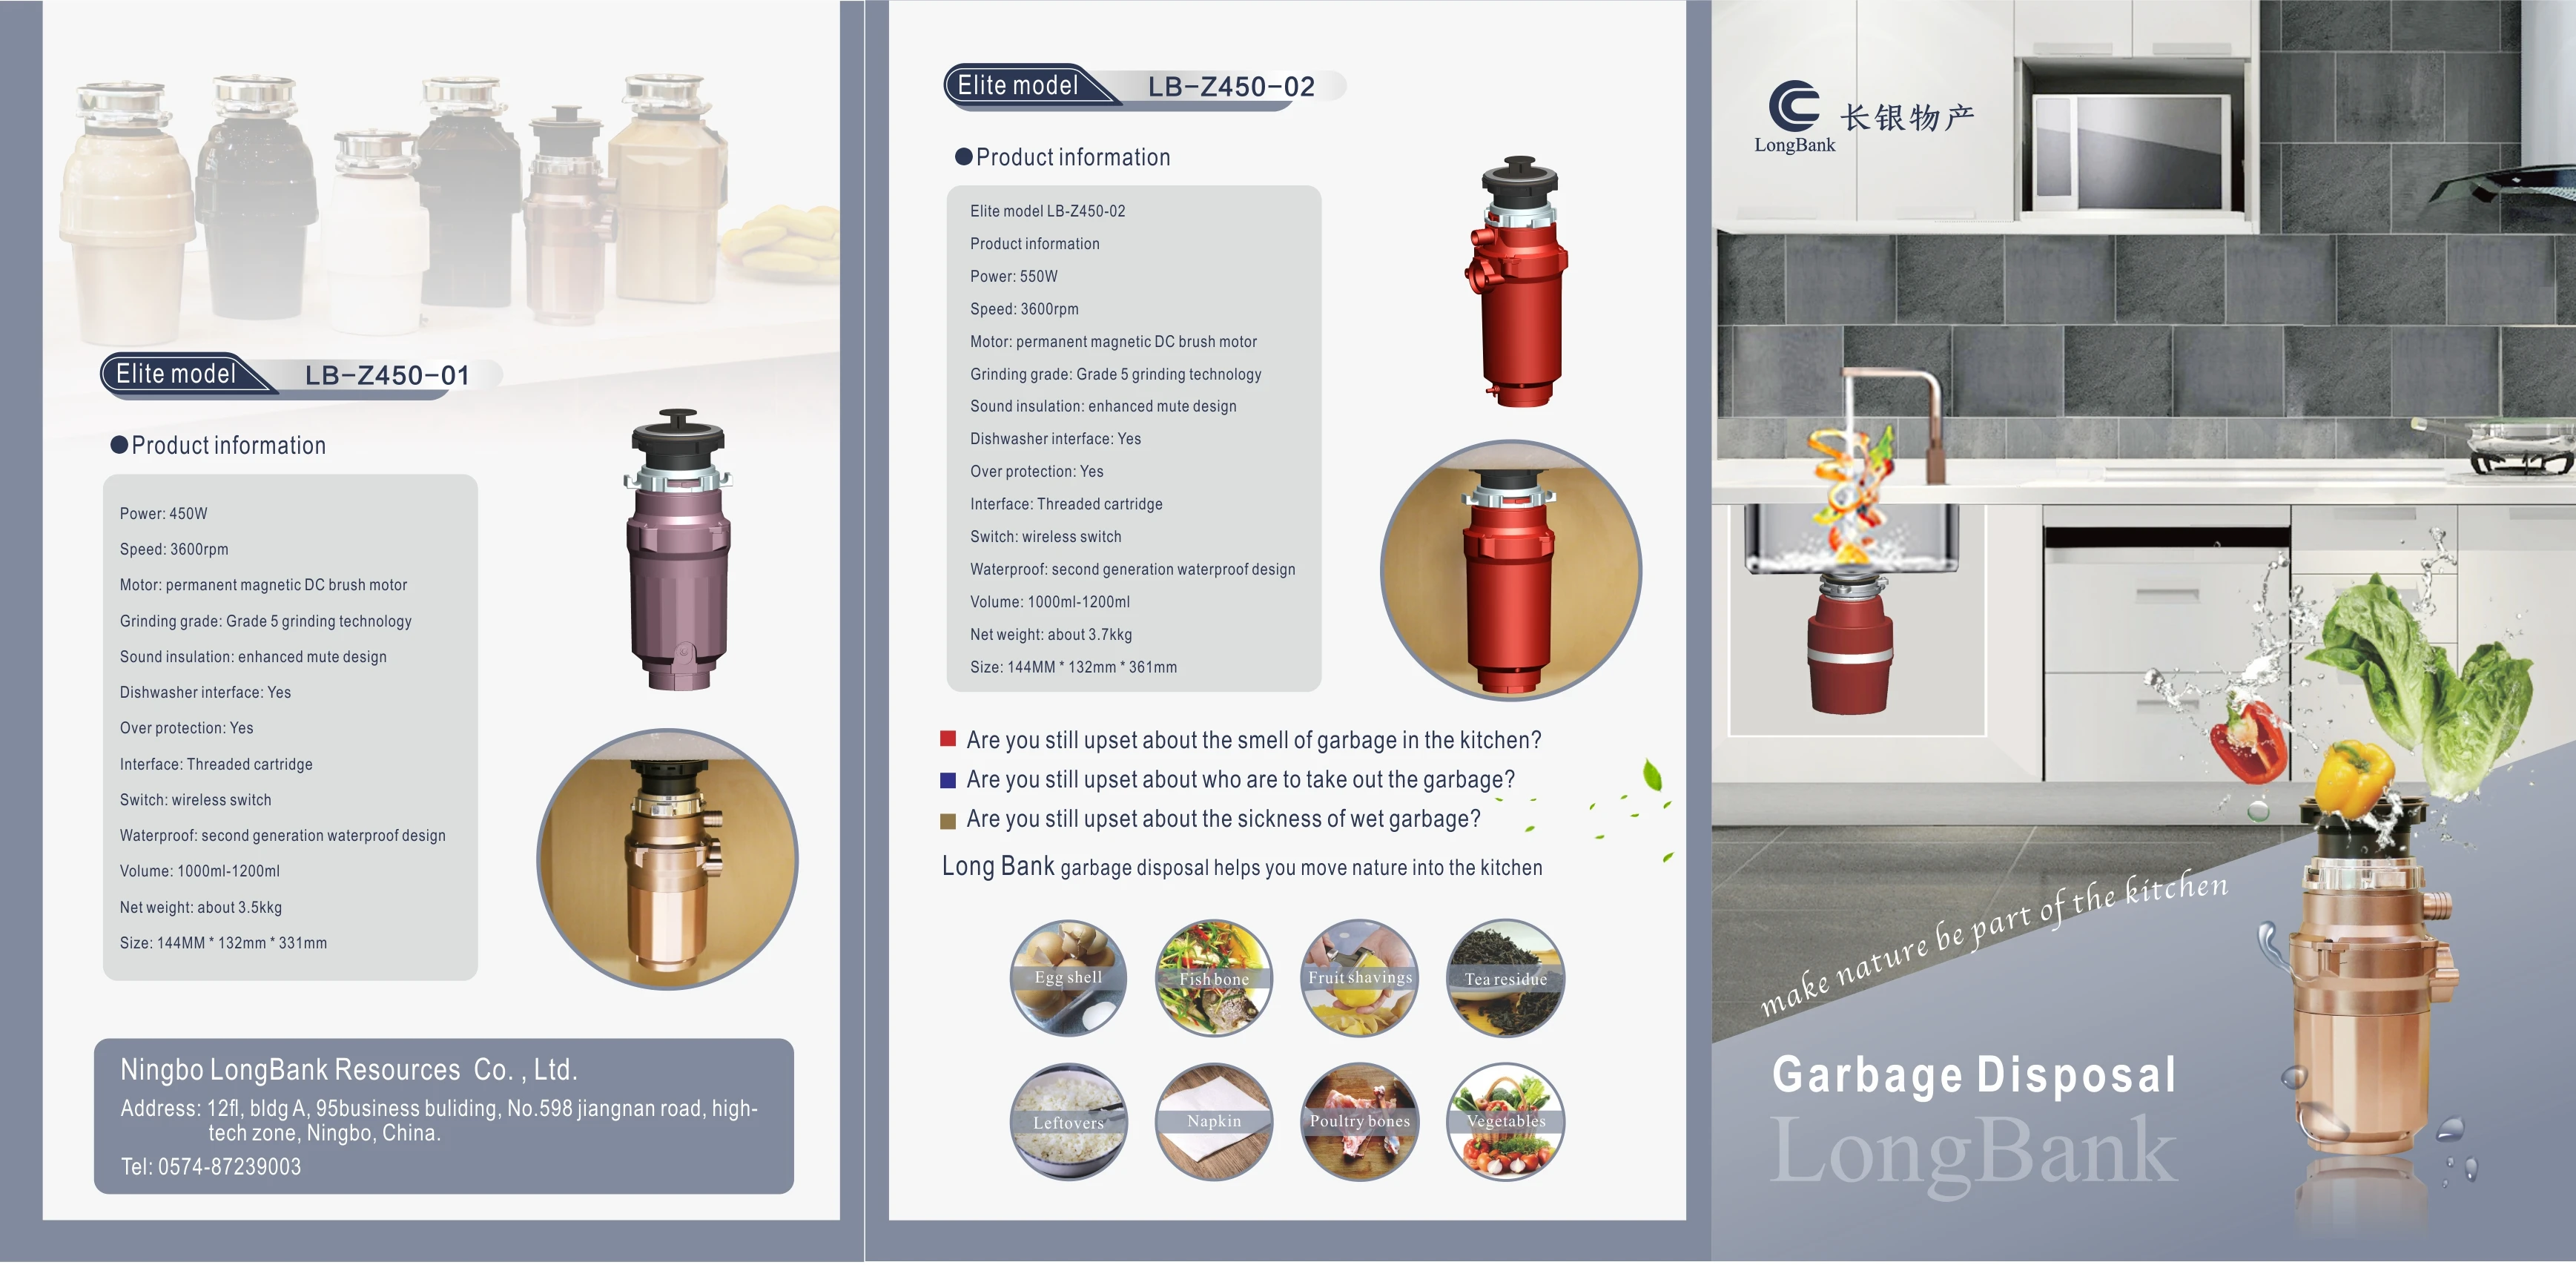 LongBank 2020 new kitchen 5-stage multigrind electric food waste disposal garbage disposer